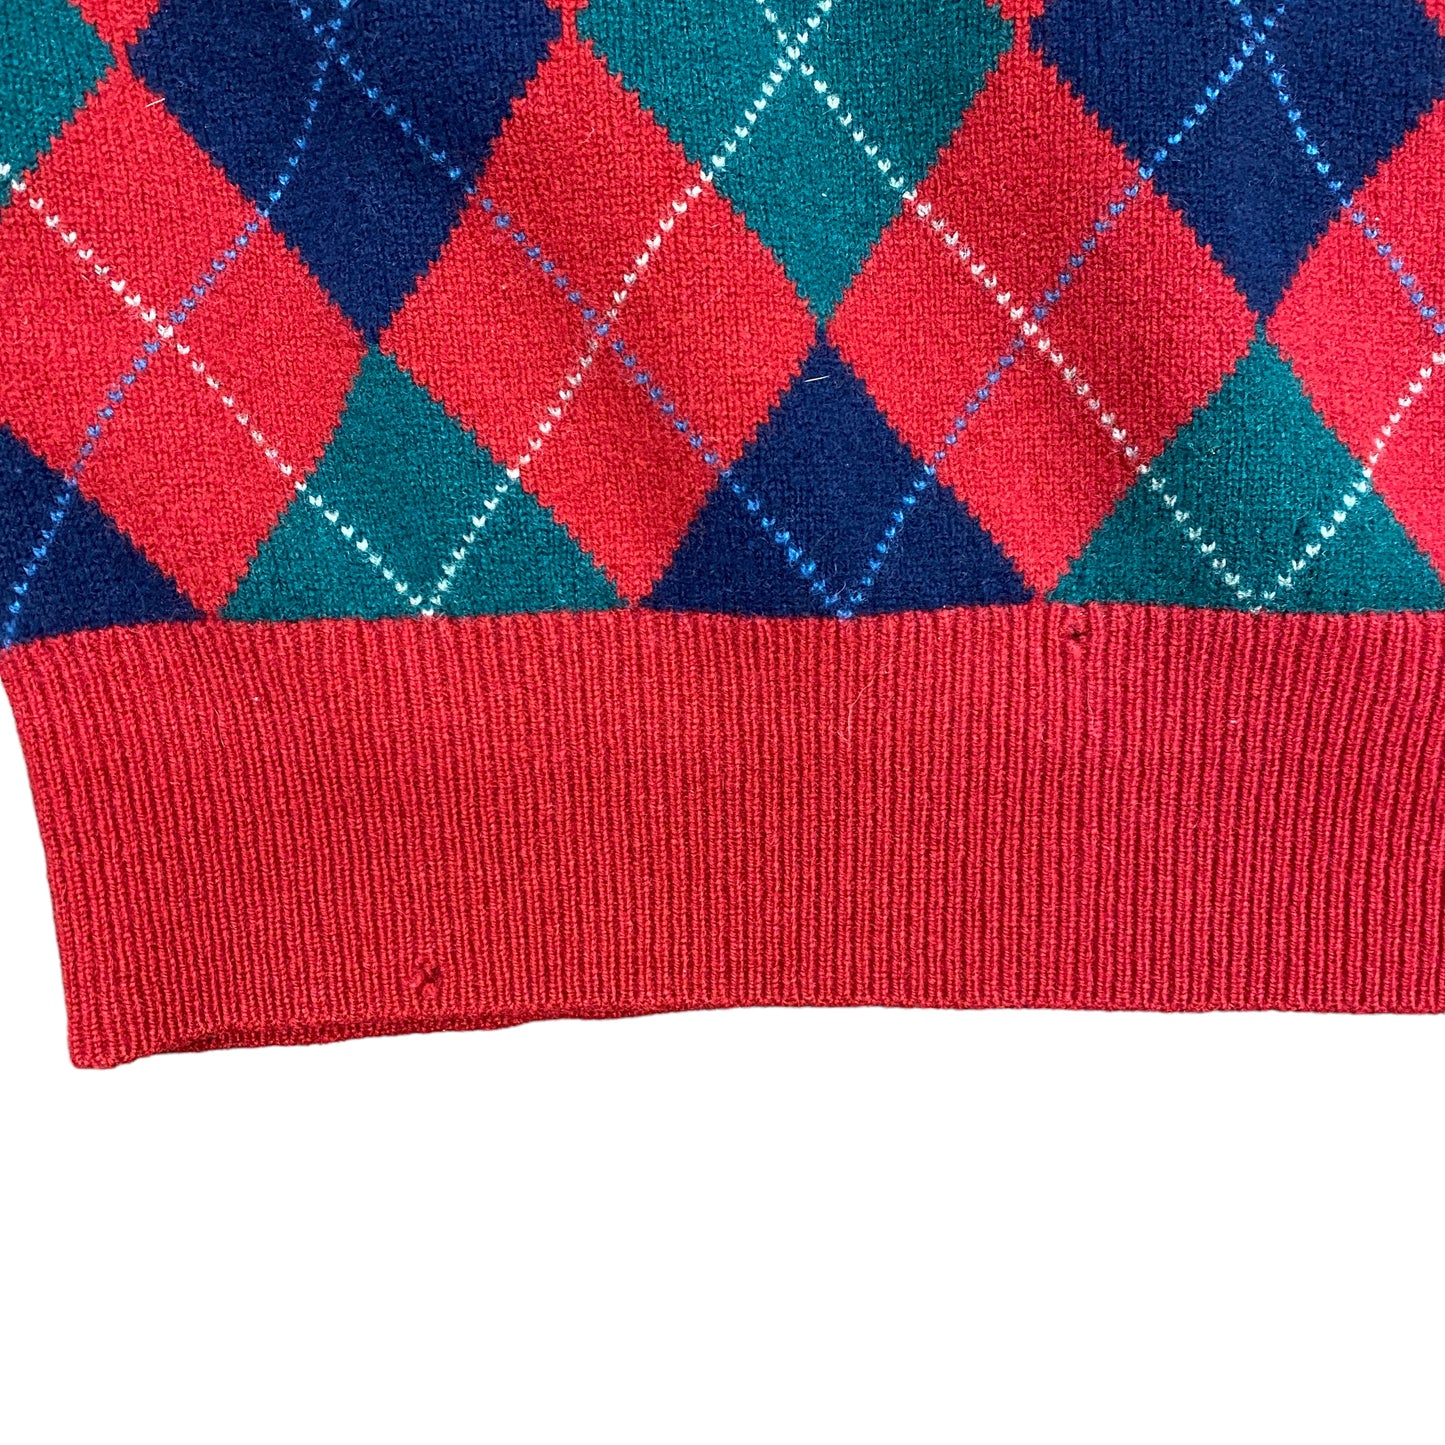 1980s Braemar Scottish Lambswool Argyle Sweater - Size Large